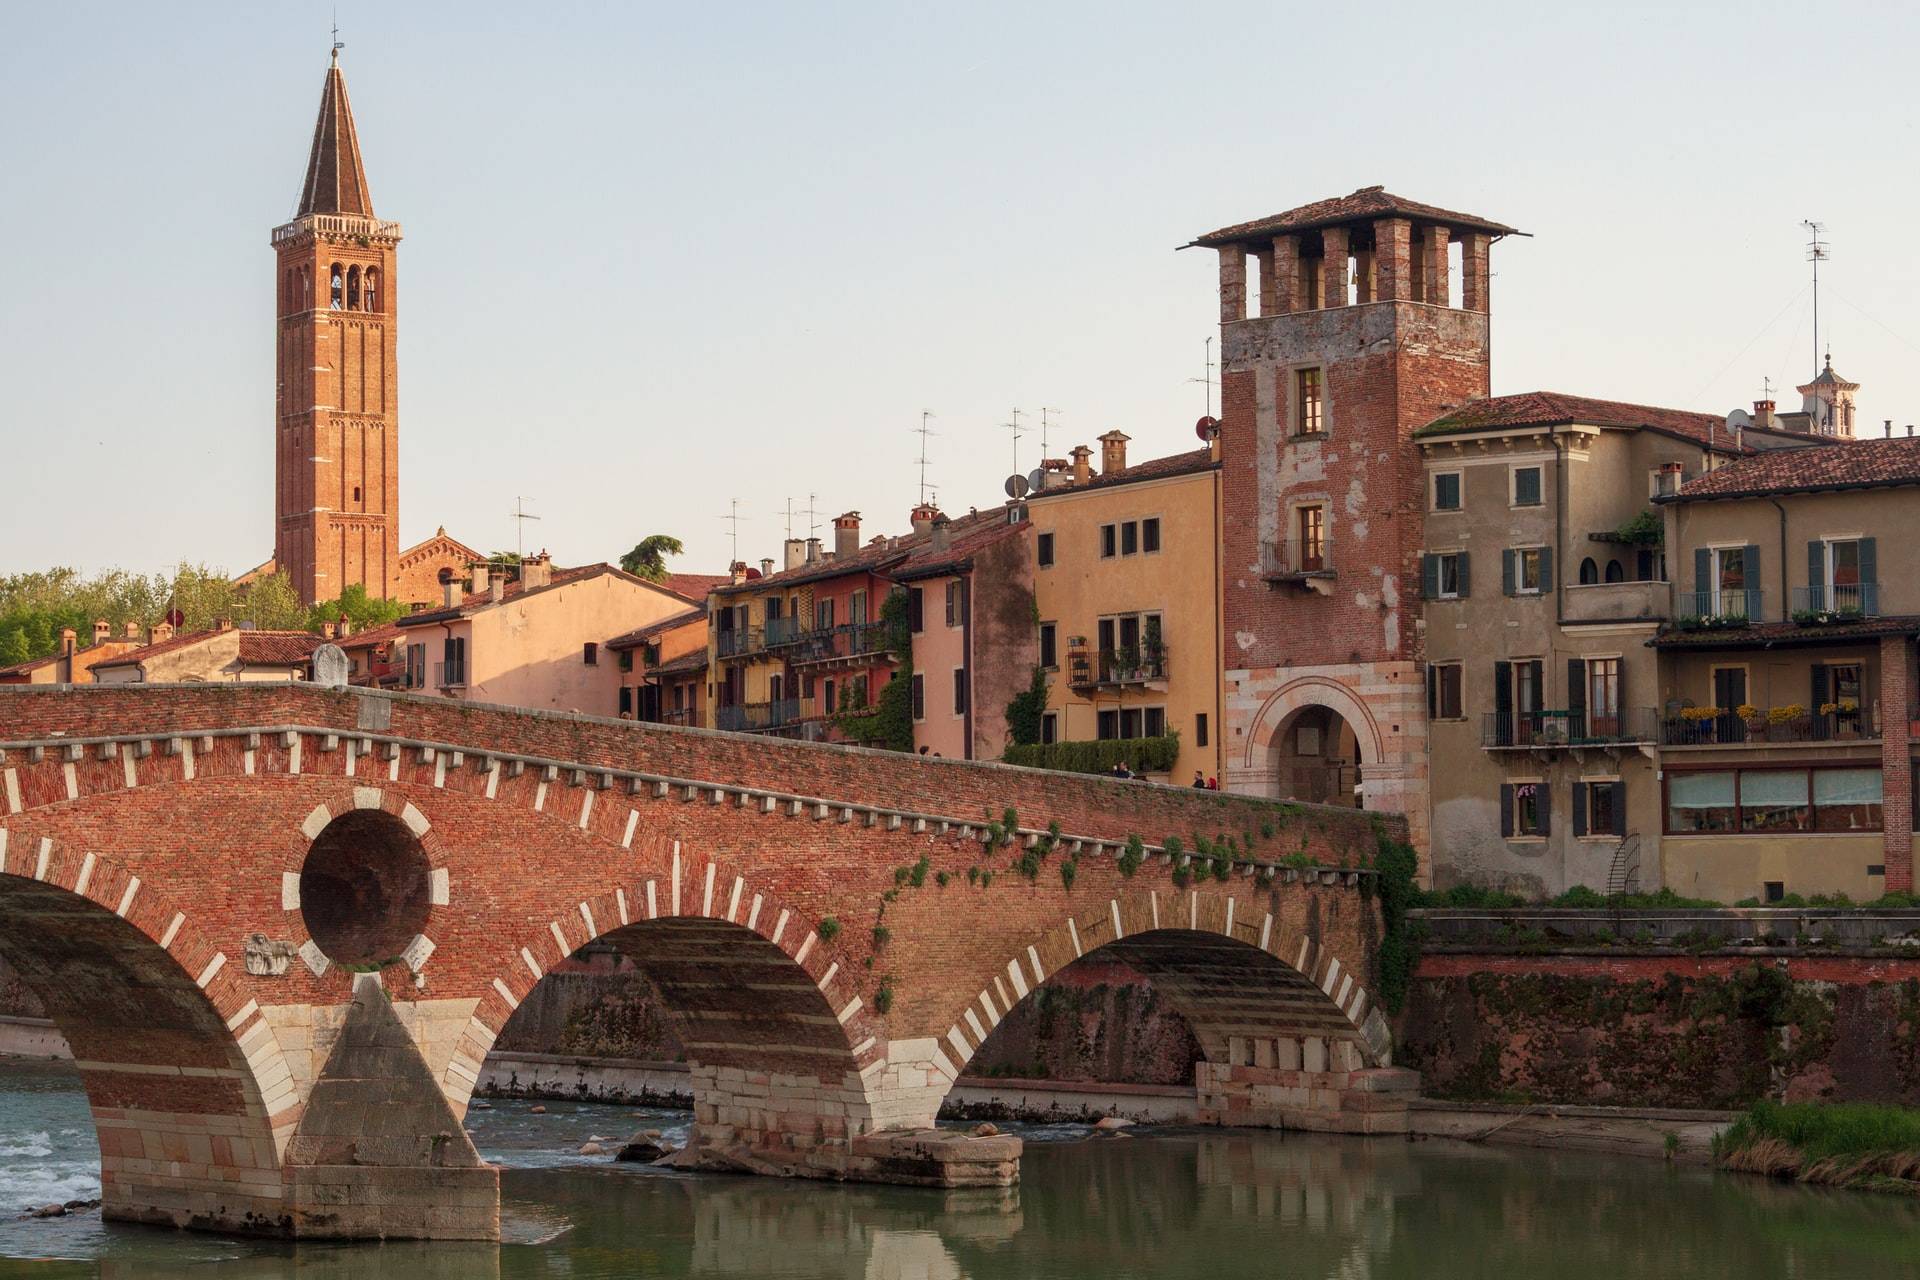 Visit Verona